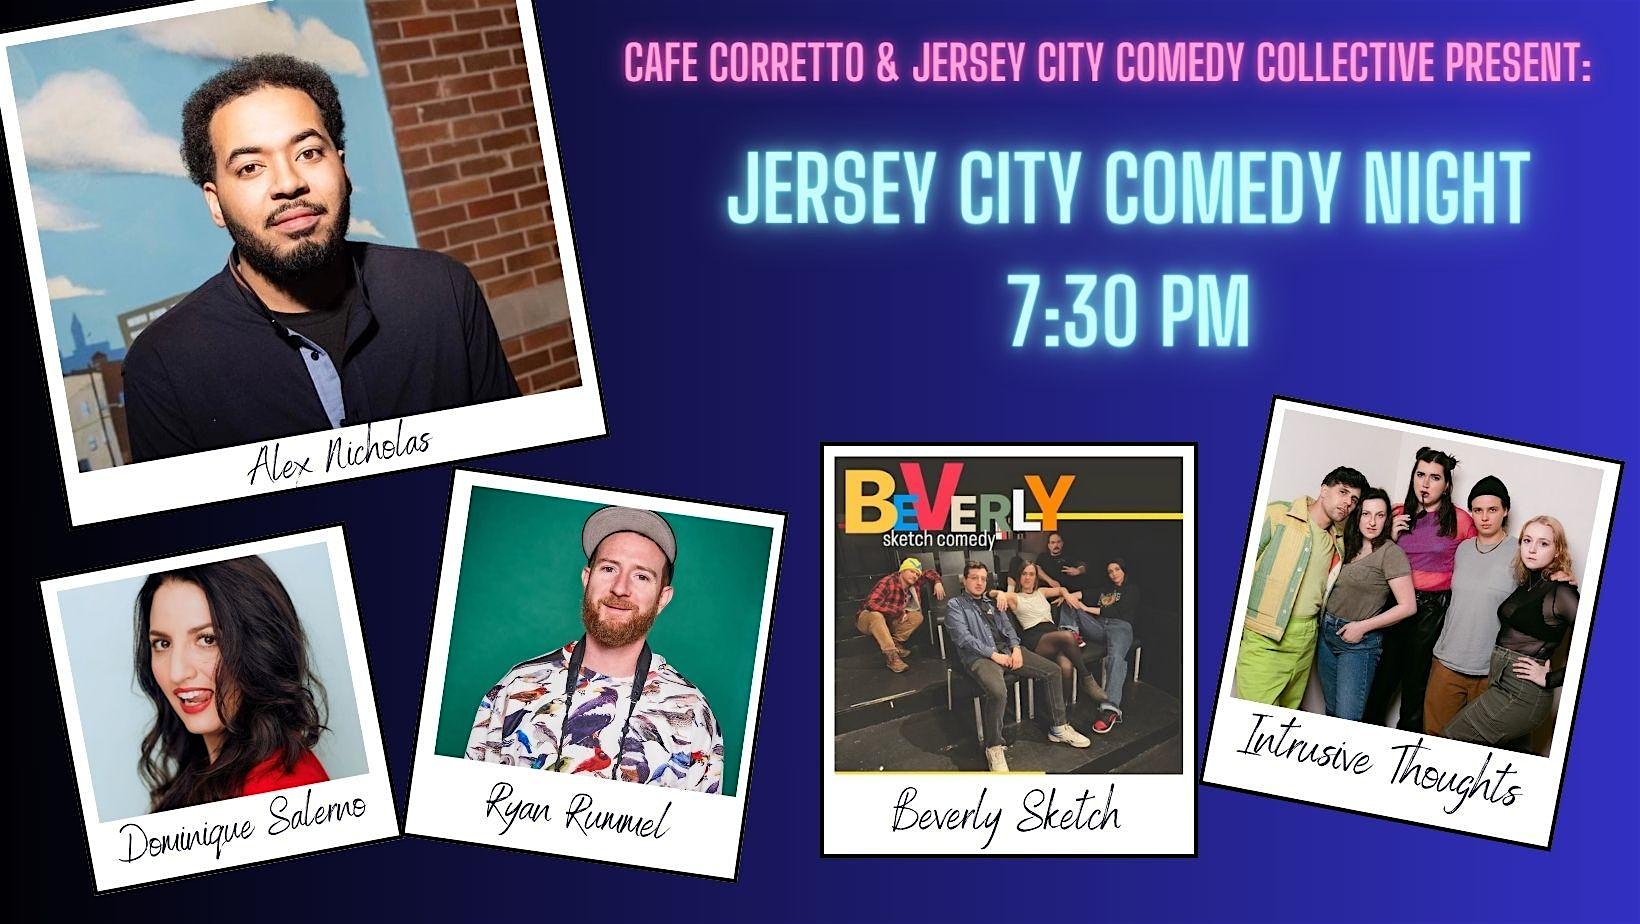 Jersey City Comedy Night!